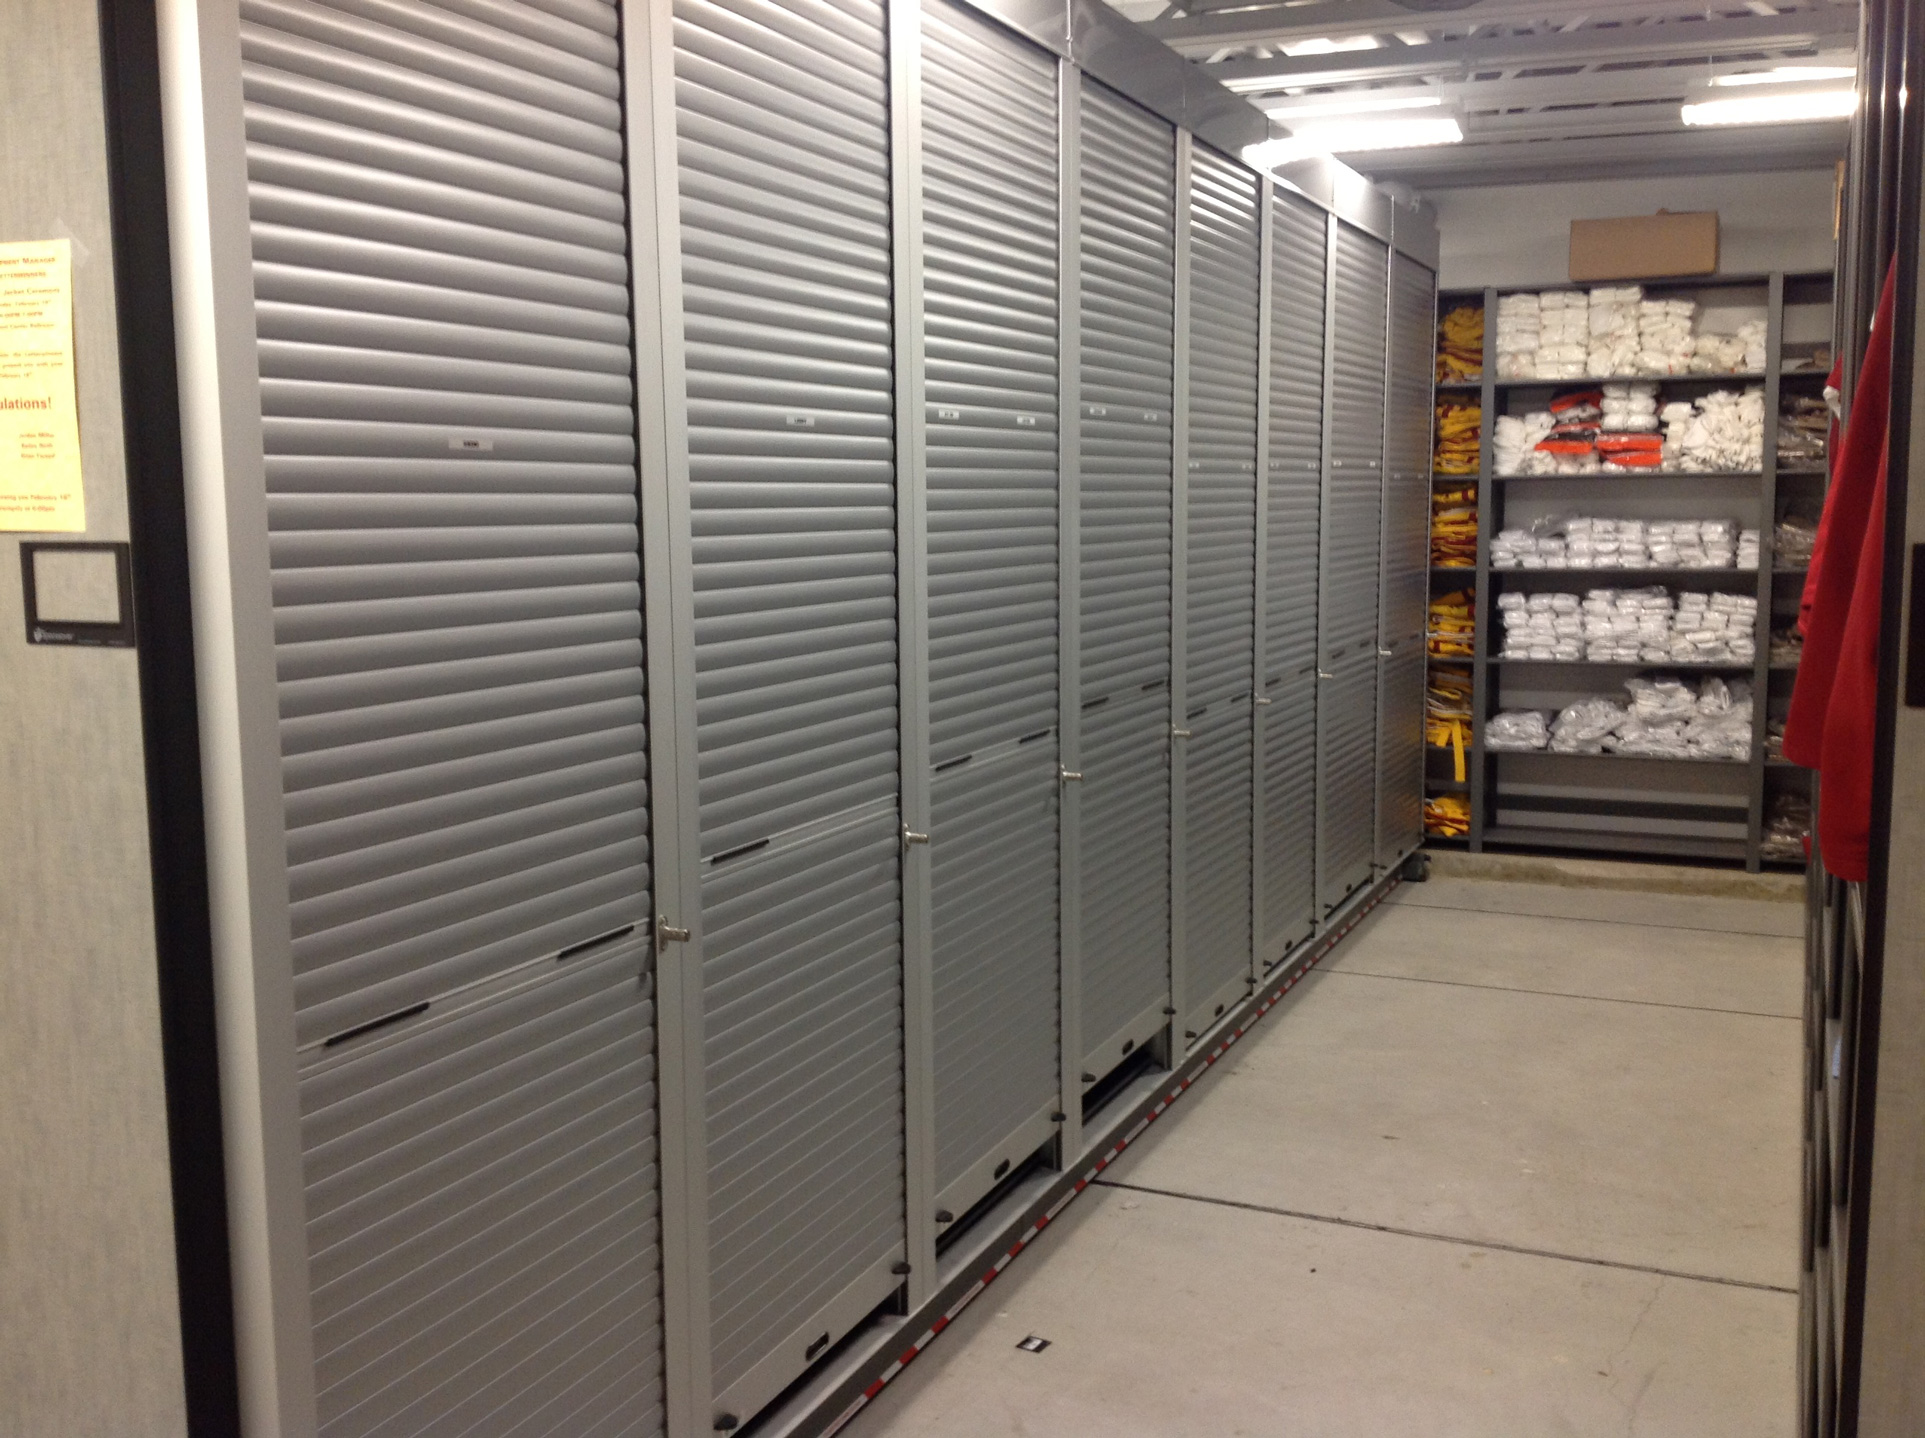 Rollock doors for athletic equipment storage